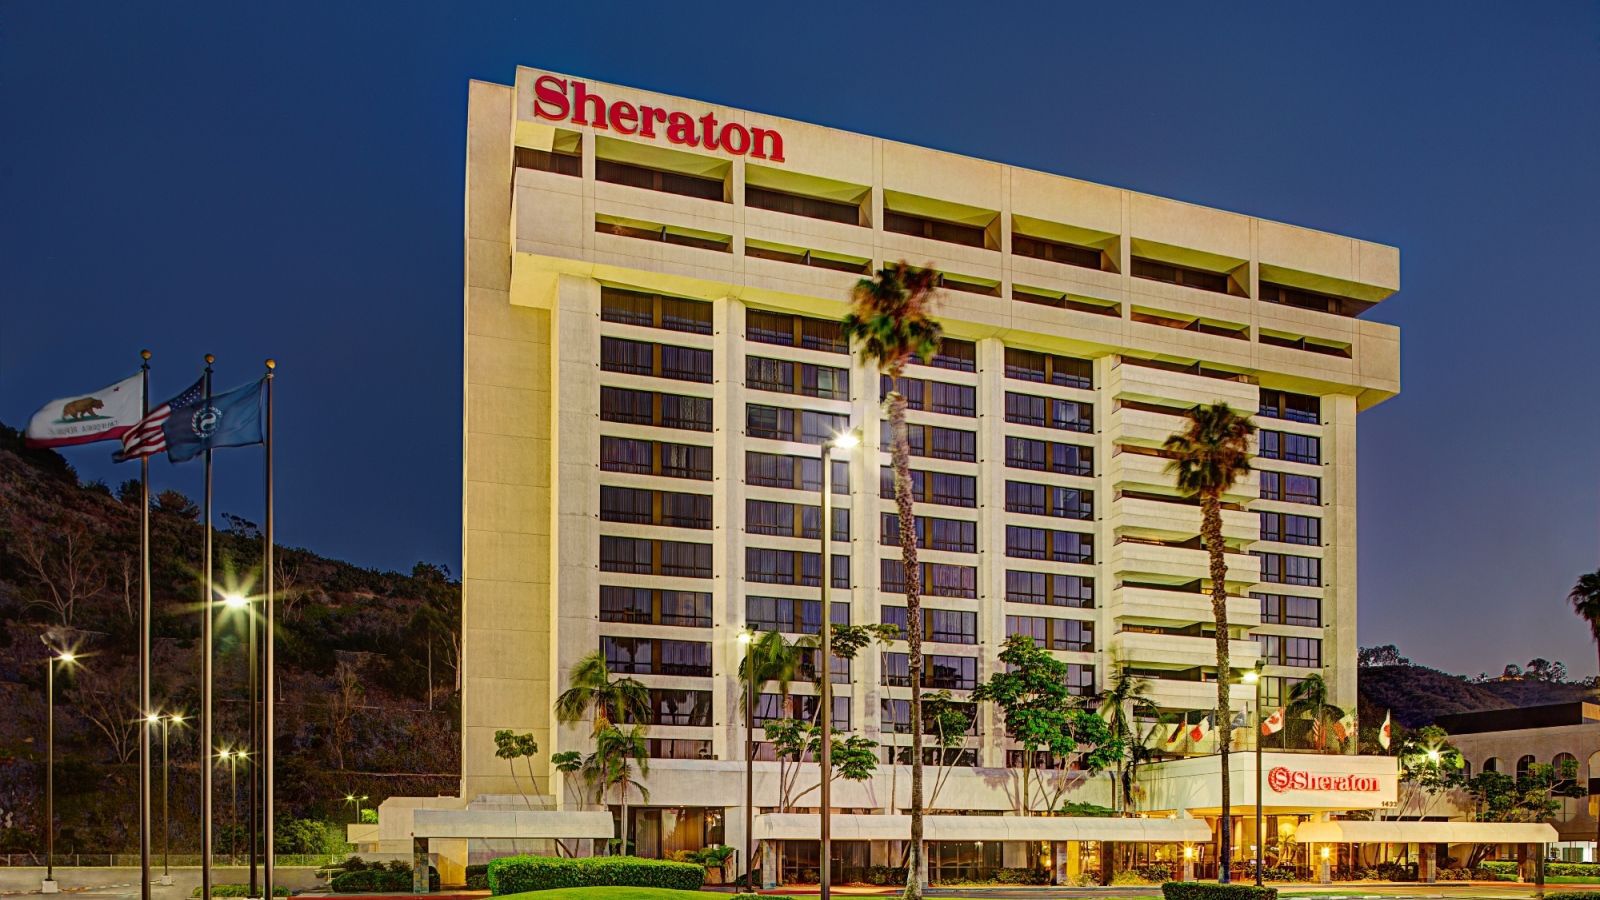 Sheraton Mission Valley San Diego Hotel, San Diego, CA Jobs